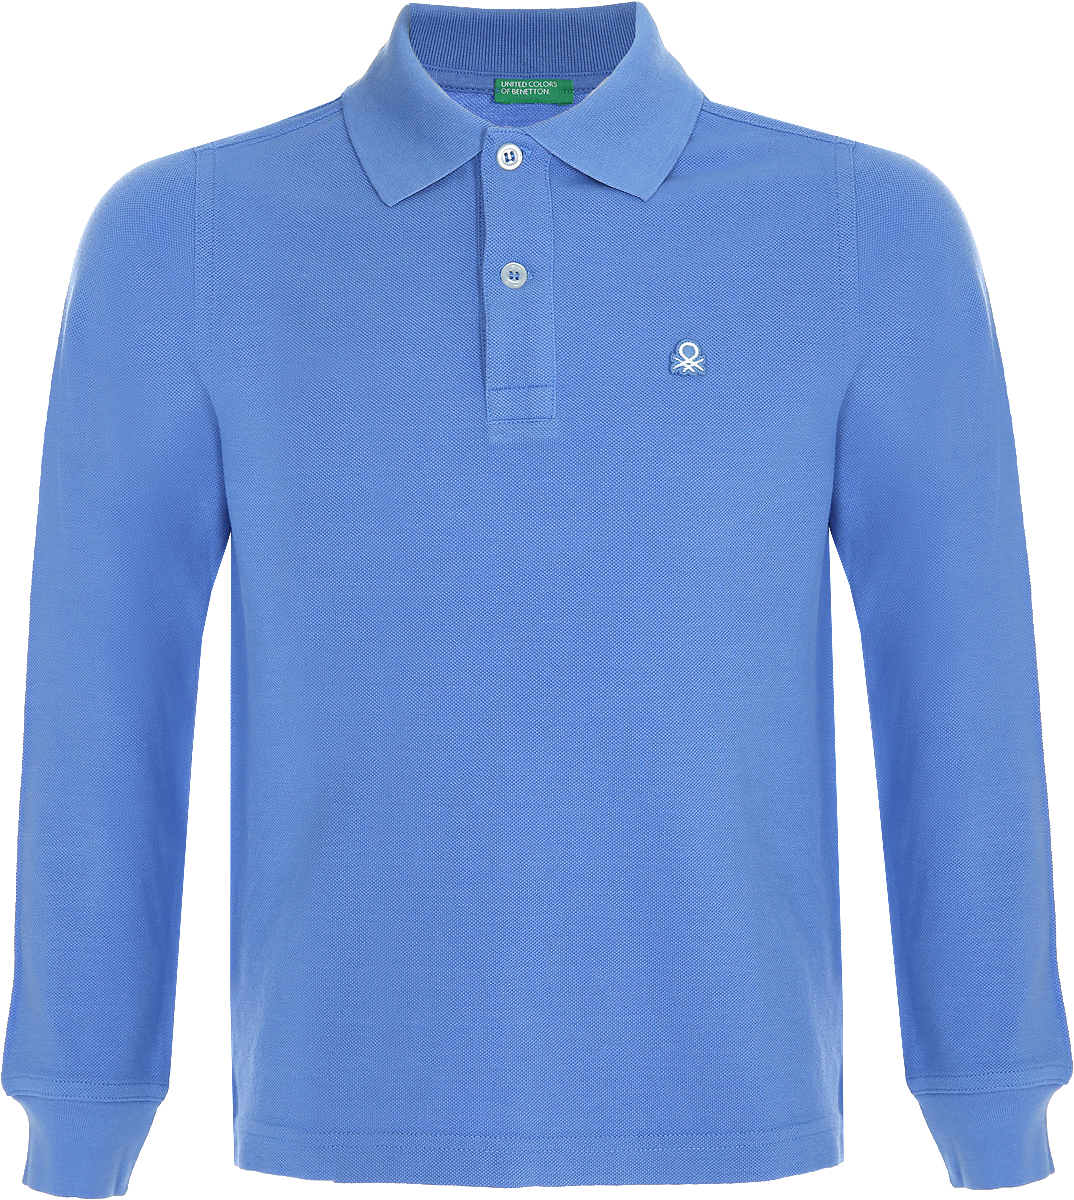 Кофта для мальчика United Colors of Benetton, цвет: голубой. 3089C3090_26R. Размер 100